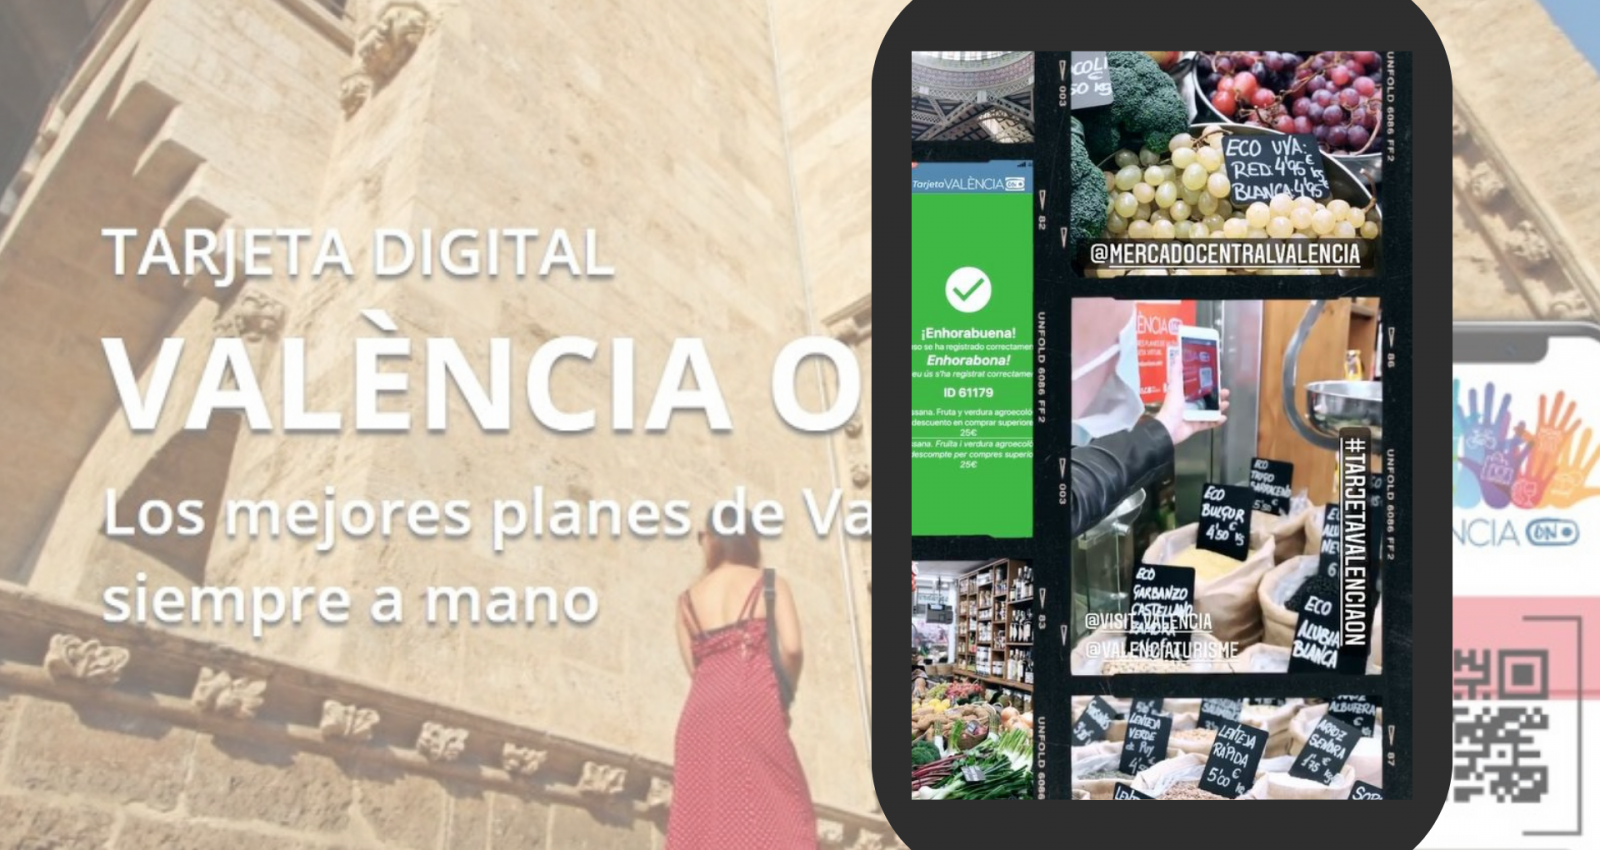 macarena gea lau closet tarjeta valencia on influencers